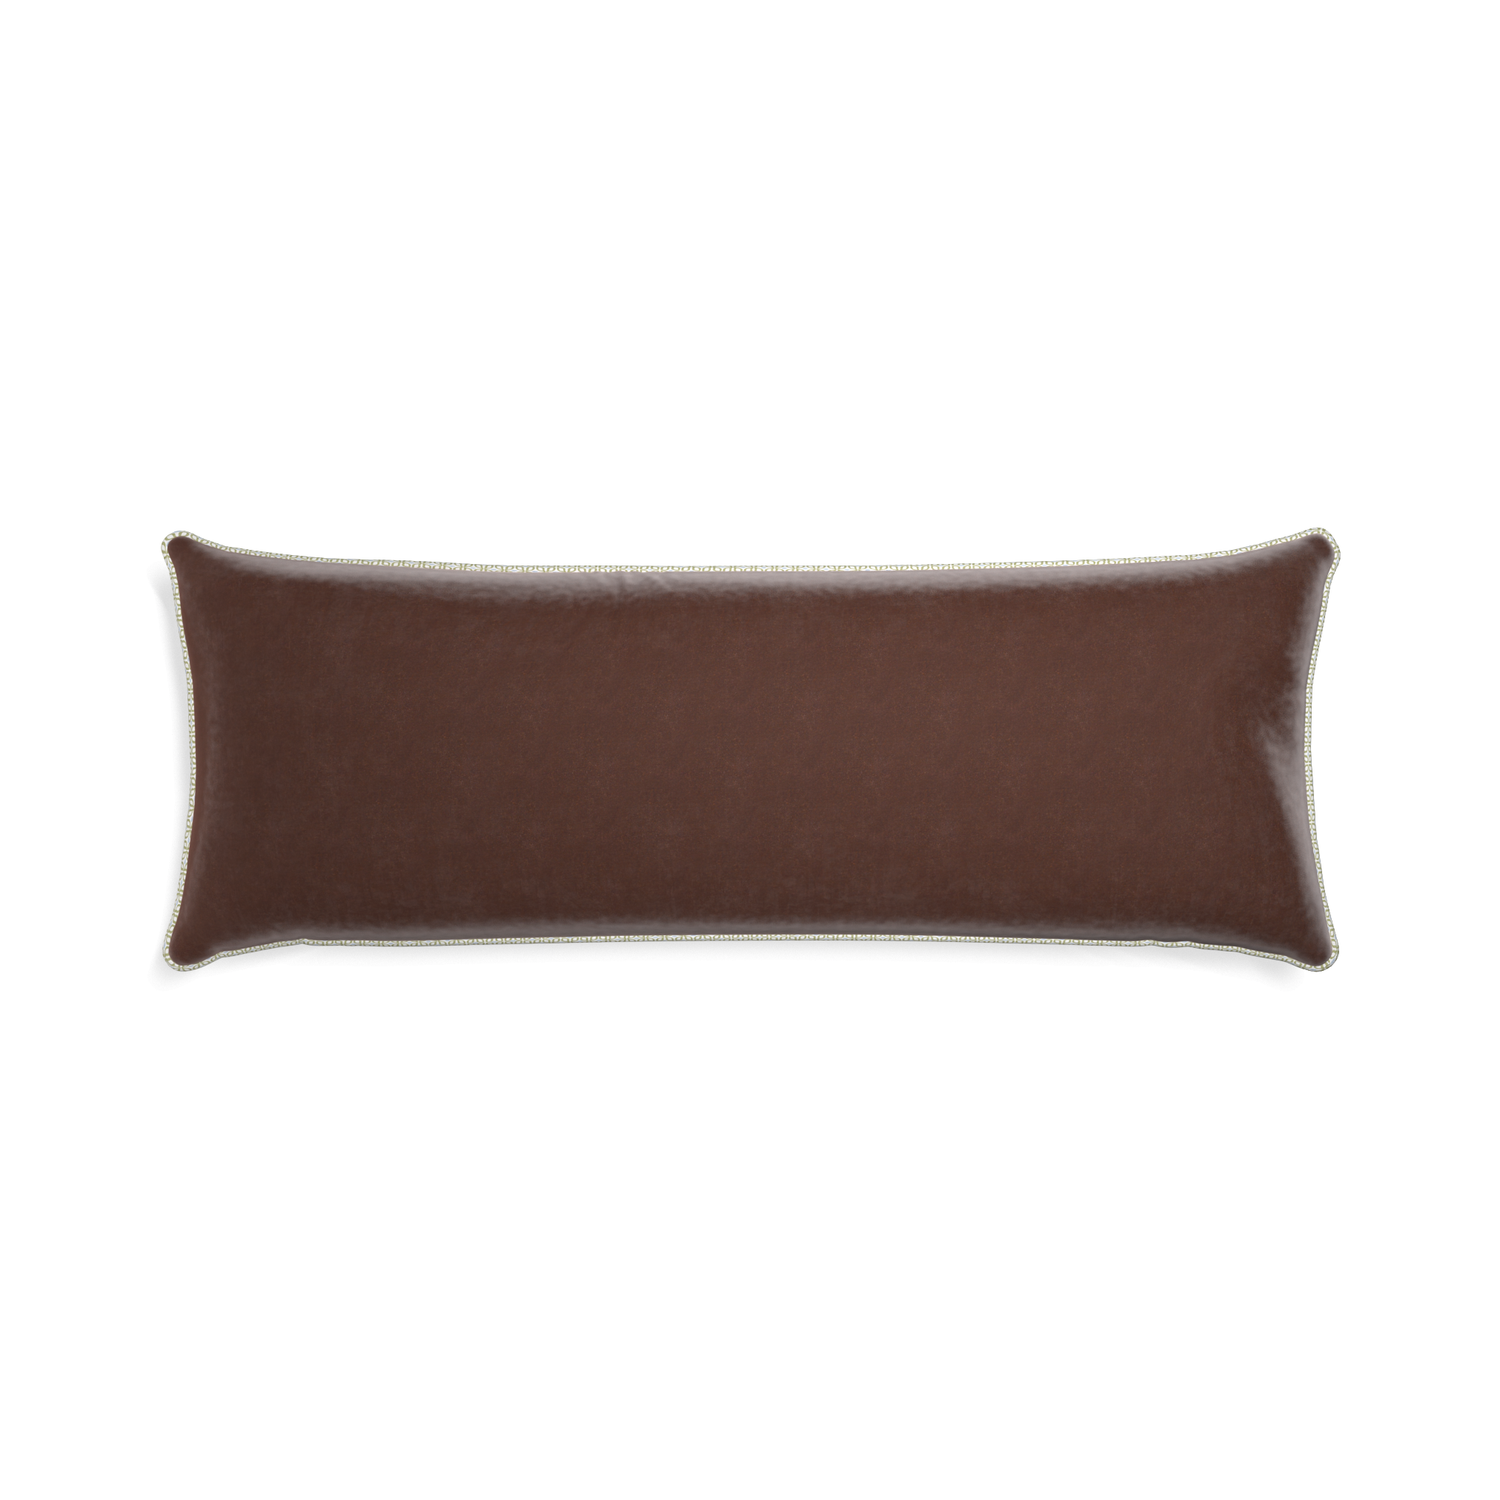 Xl-lumbar walnut velvet custom pillow with l piping on white background